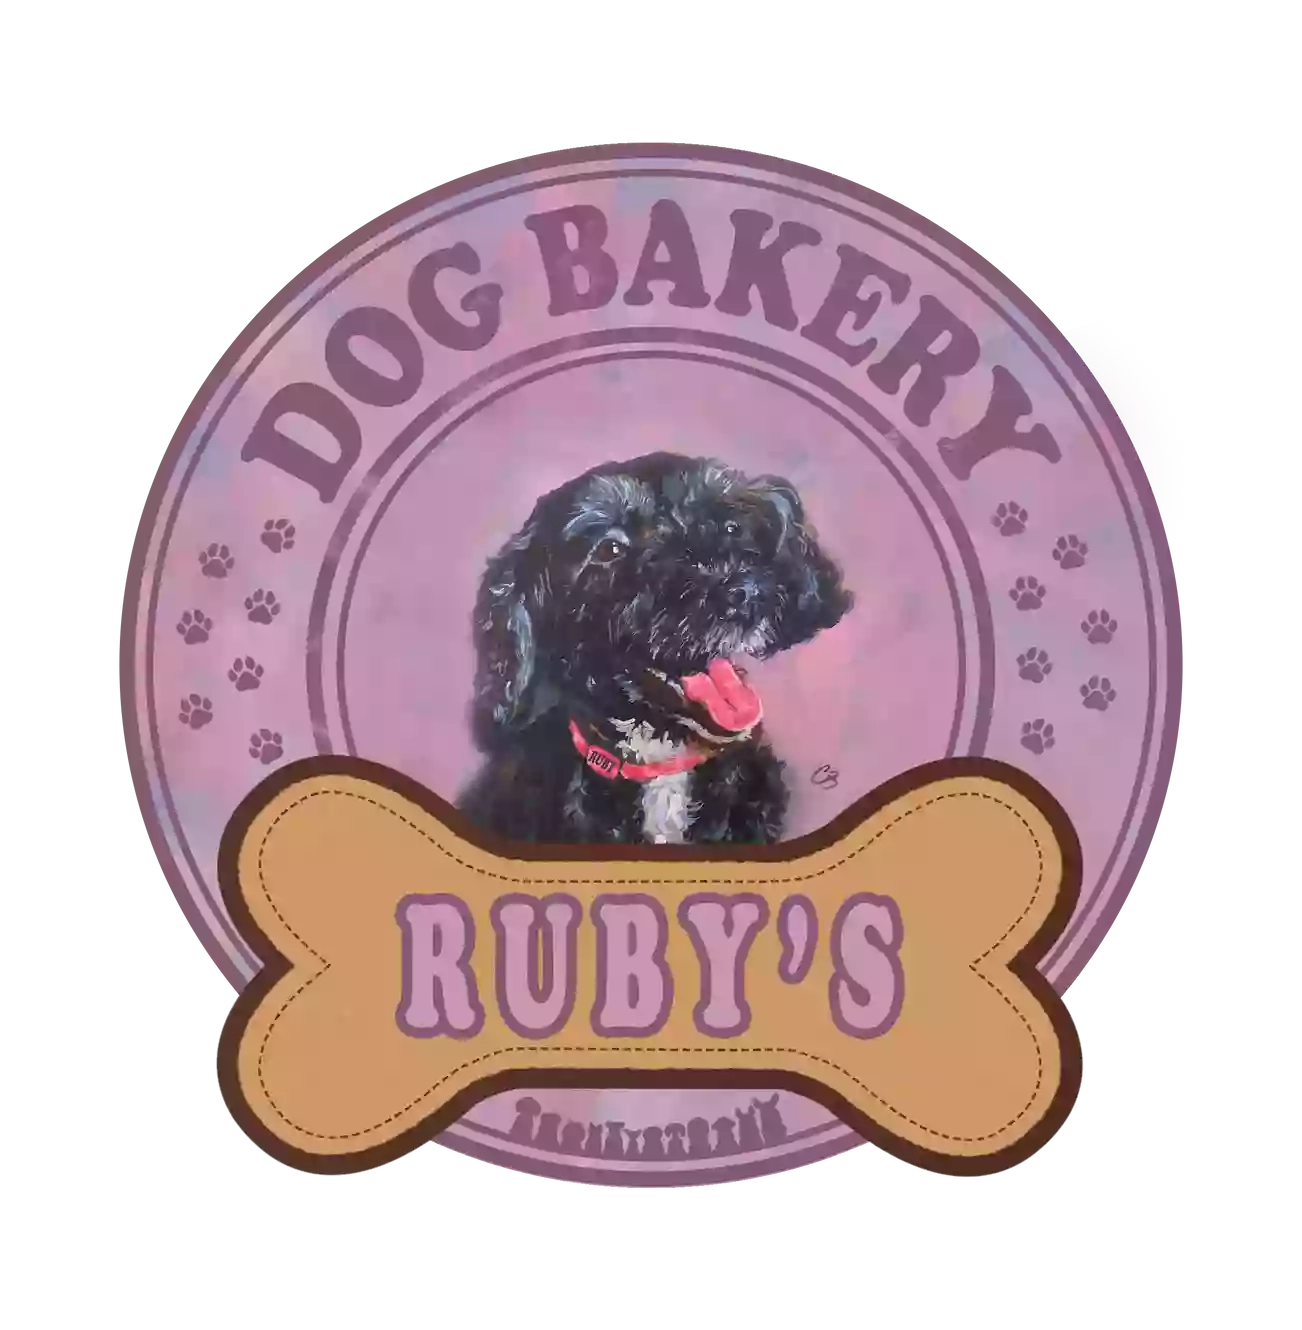 Ruby's dog bakery